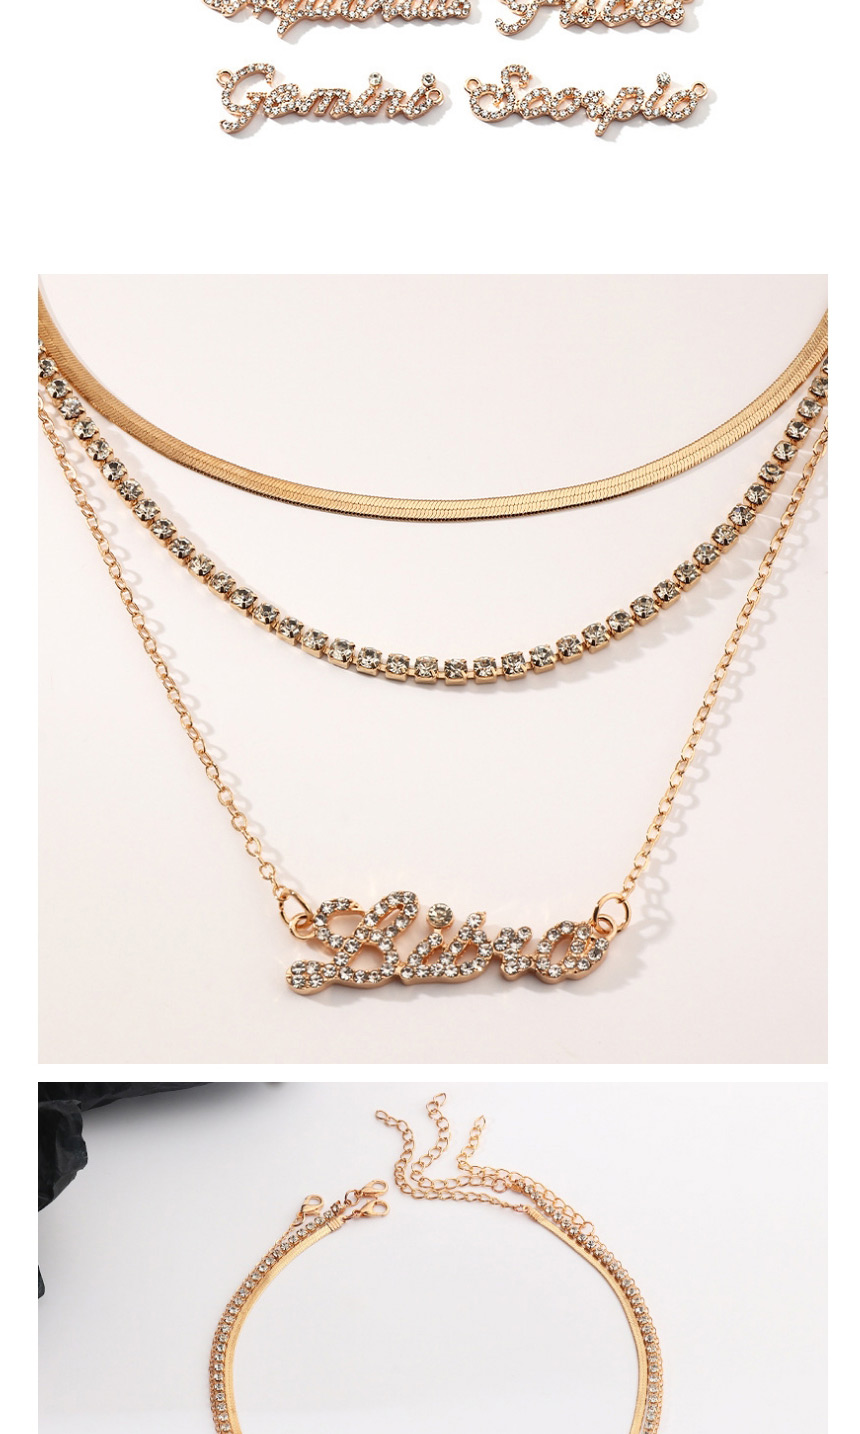 Fashion Pisces Twelve Constellation Letters Multilayer Necklace With Diamonds,Pendants